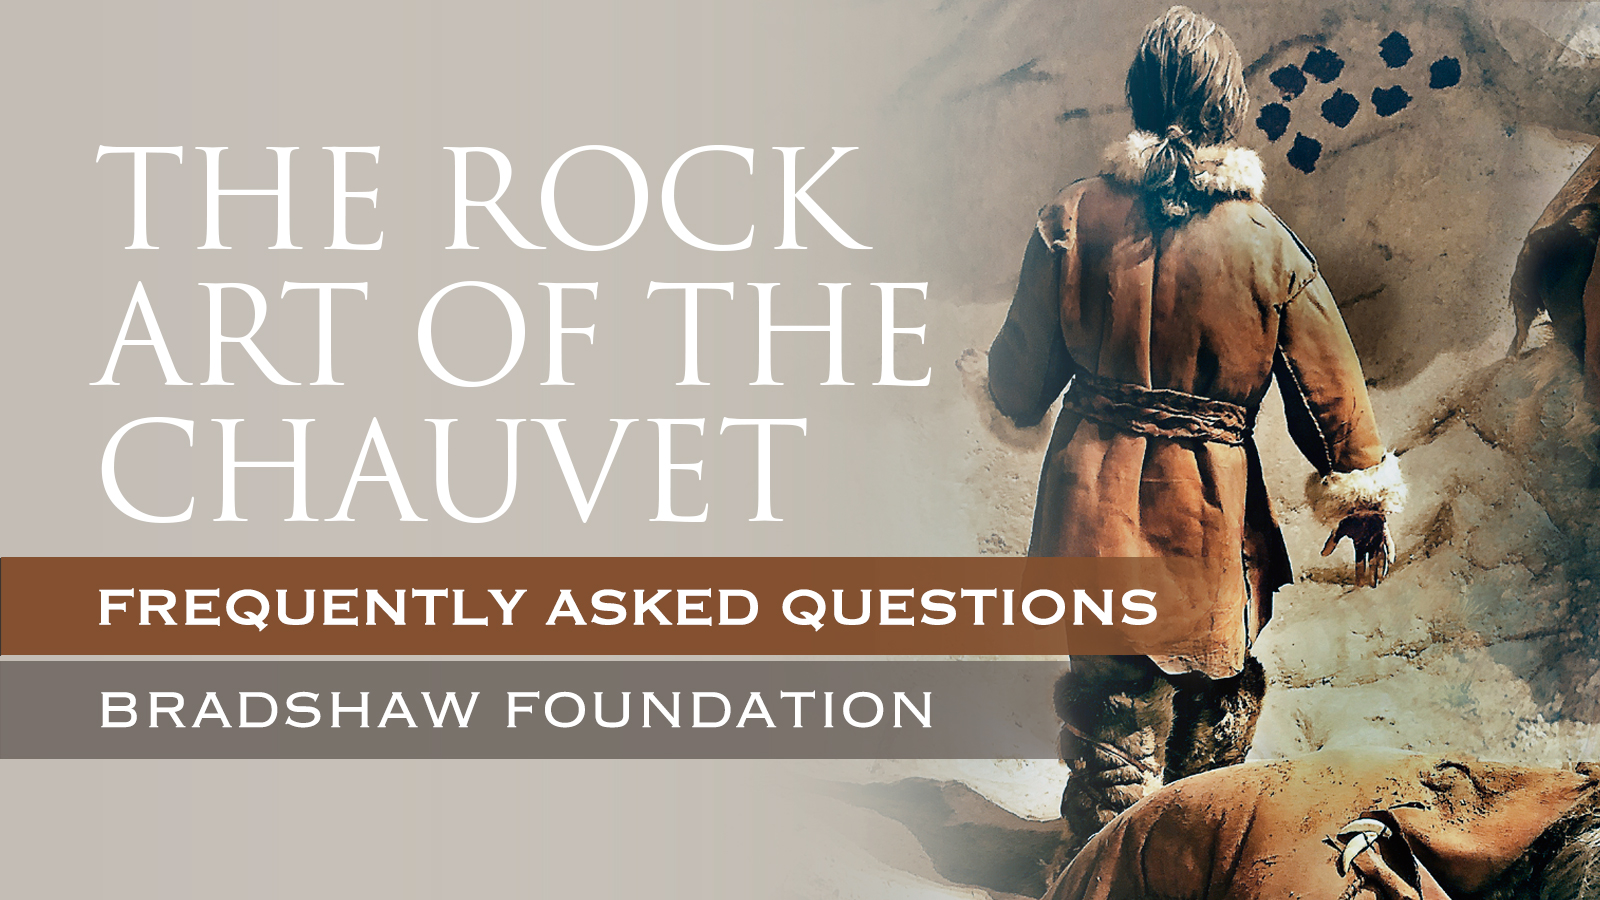 The Chauvet Cave FAQ